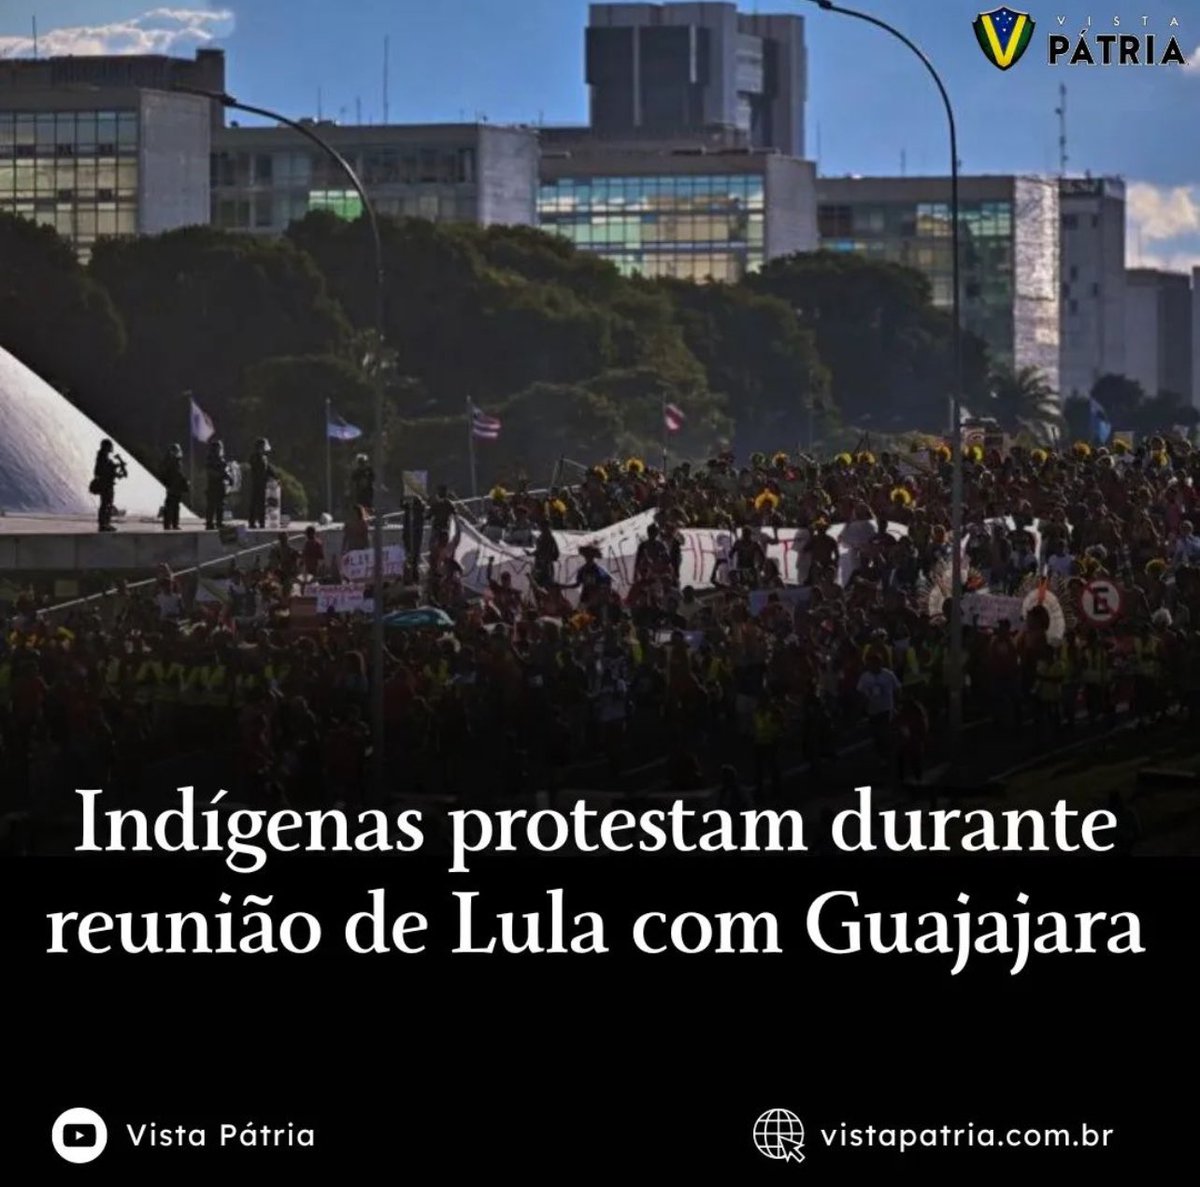 Vai levar uma flechada bem na 🍑
#LulaLadraoSeuLugarENaPrisao